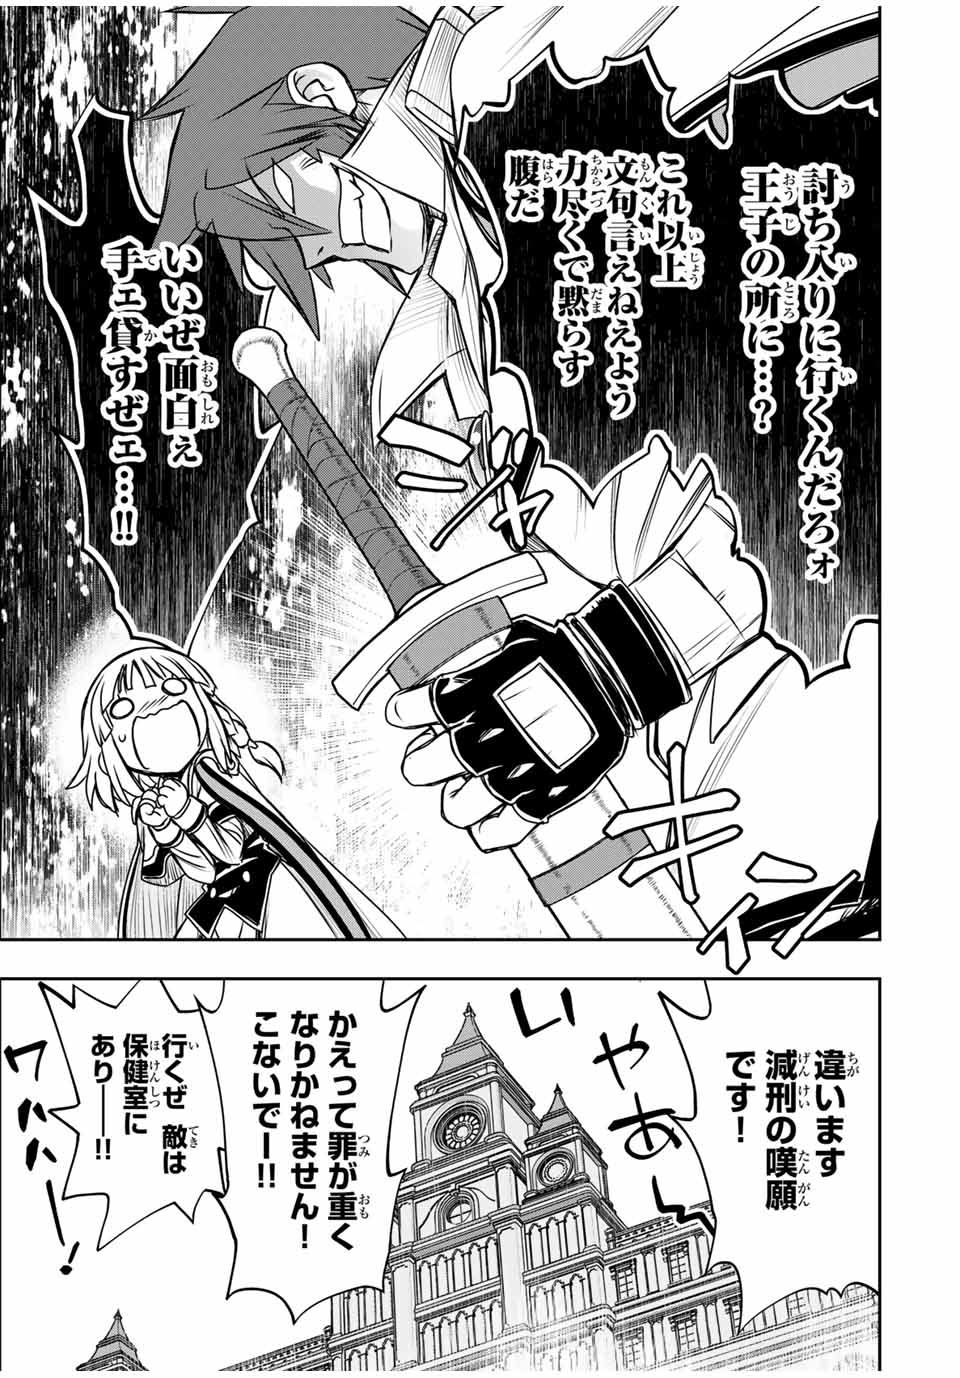 Nengan no Akuyaku Reijou (Last Boss) no Karada wo Teniiretazo!  - Chapter 17 - Page 3